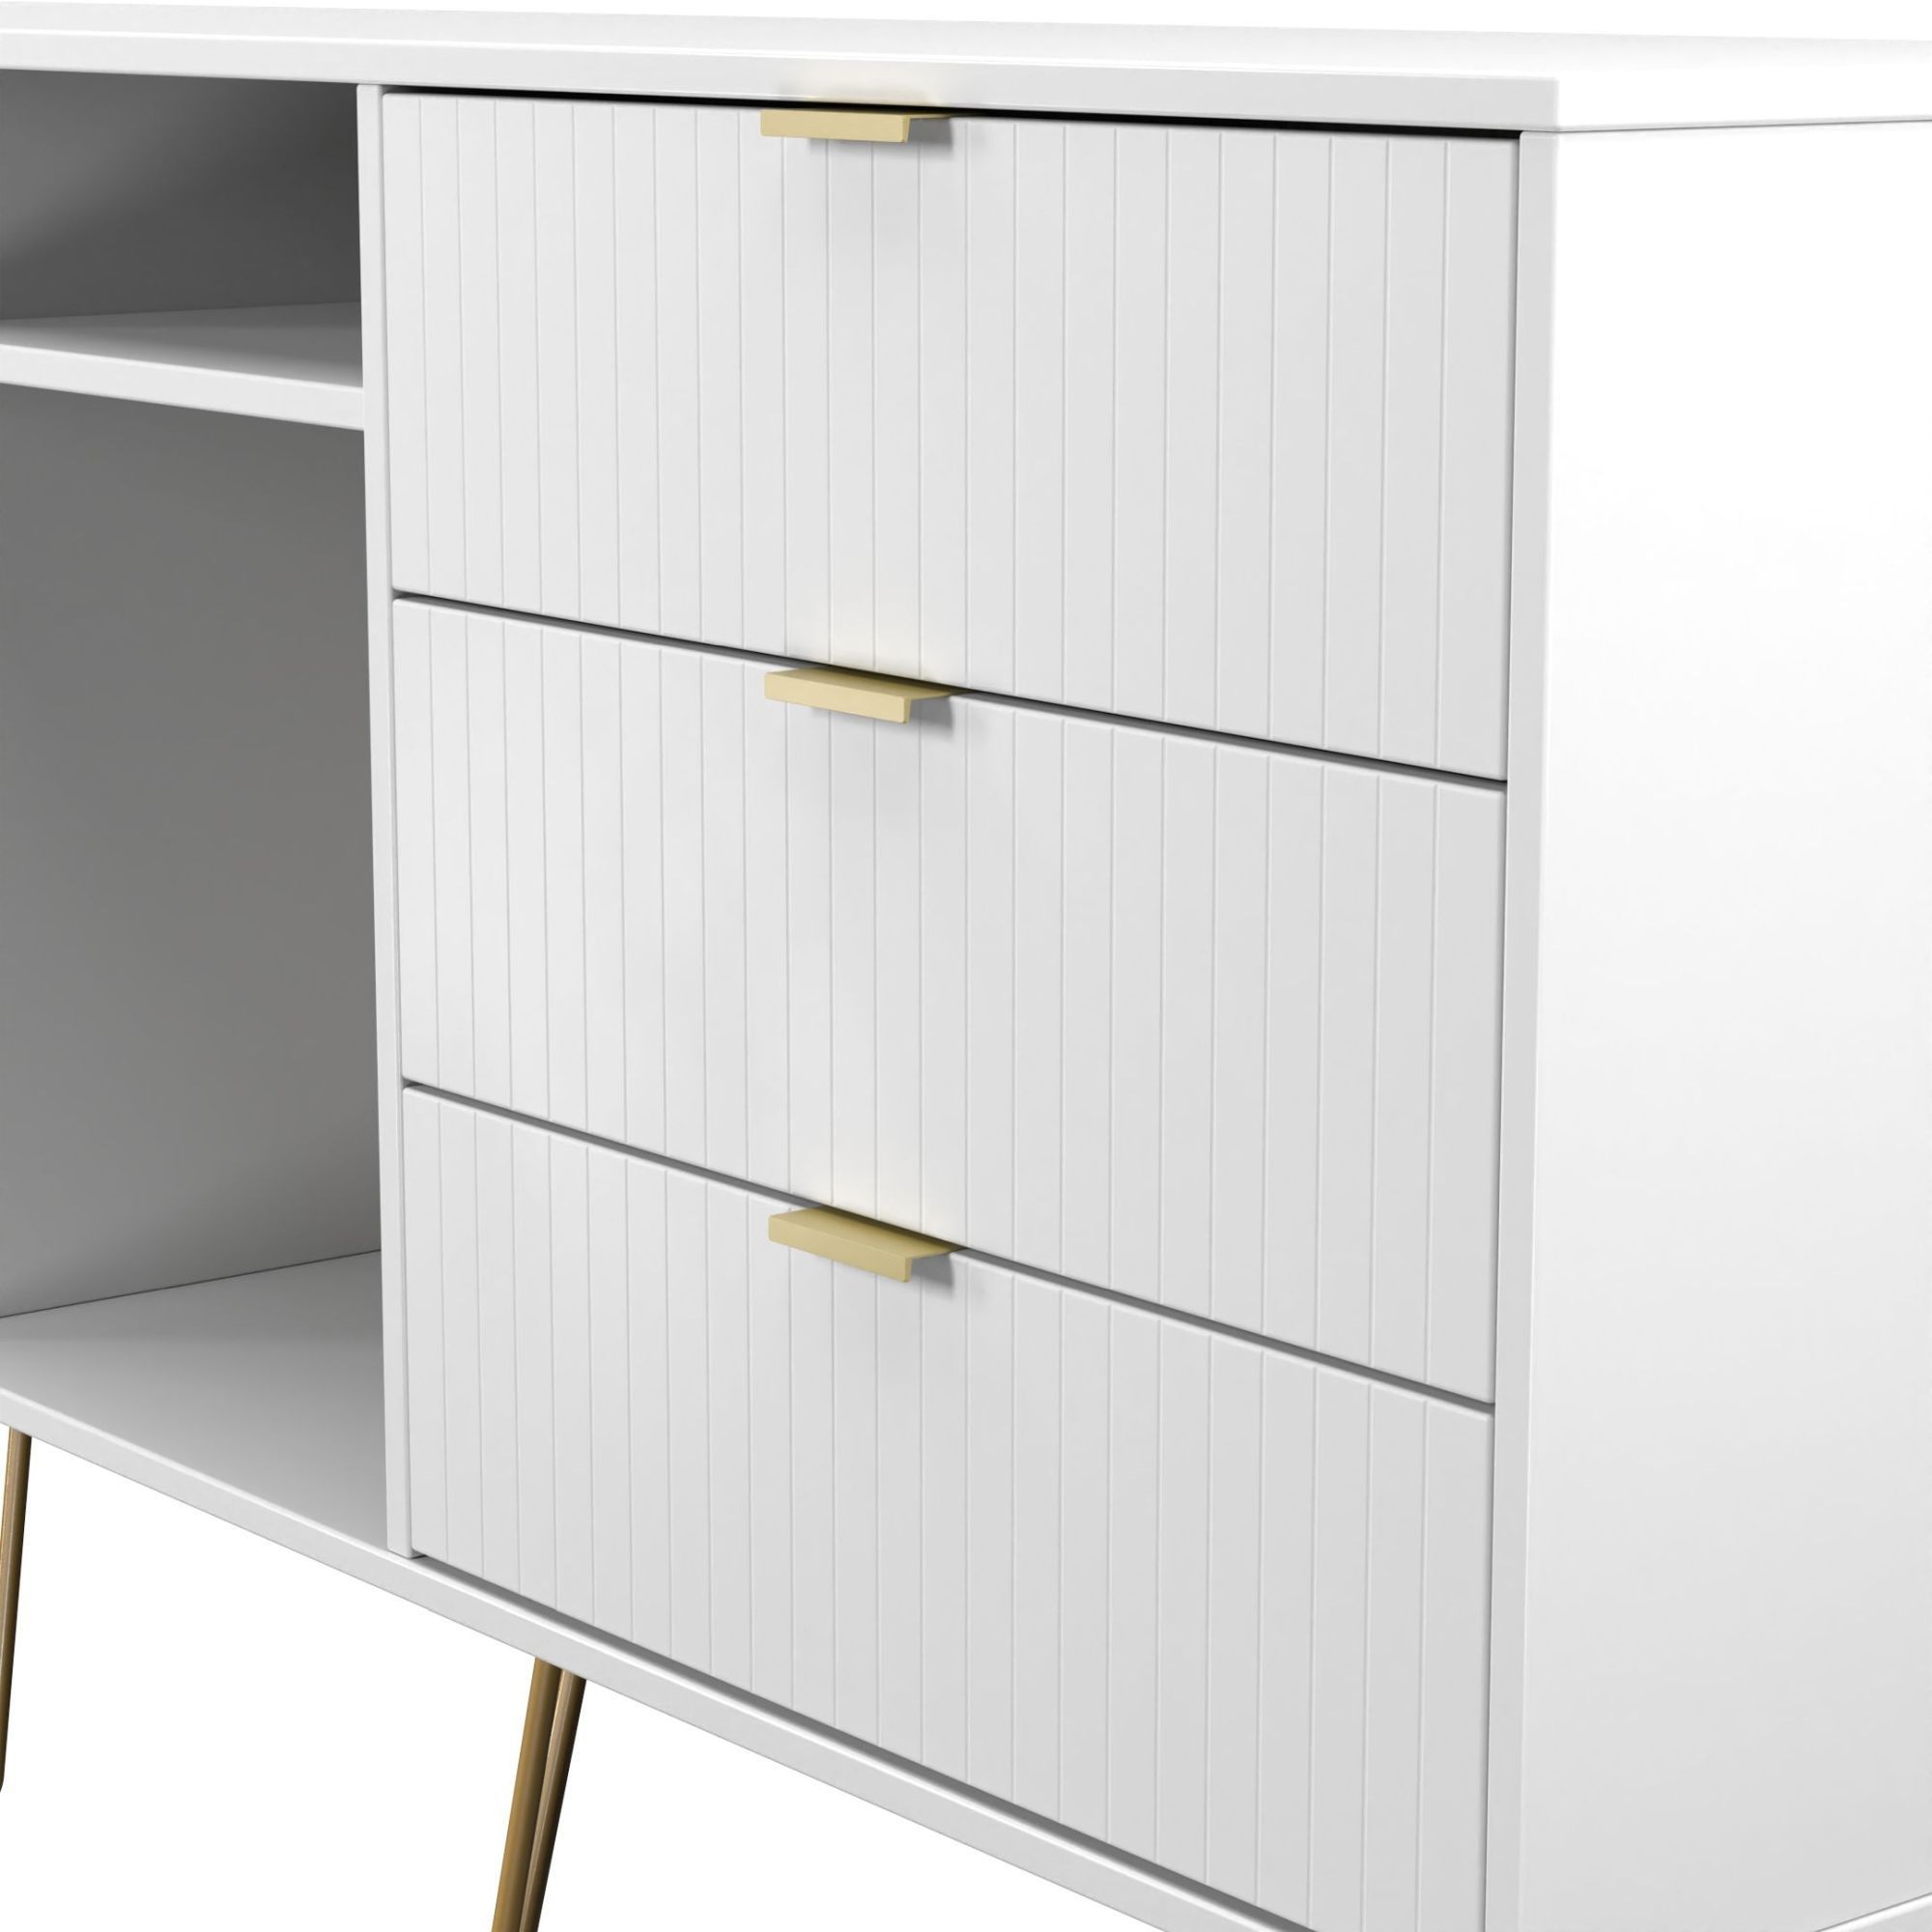 Linear Ready assembled Matt white Media unit with 2 shelves & 6 drawers, (H)152cm x (W)74cm x (D)39.5cm